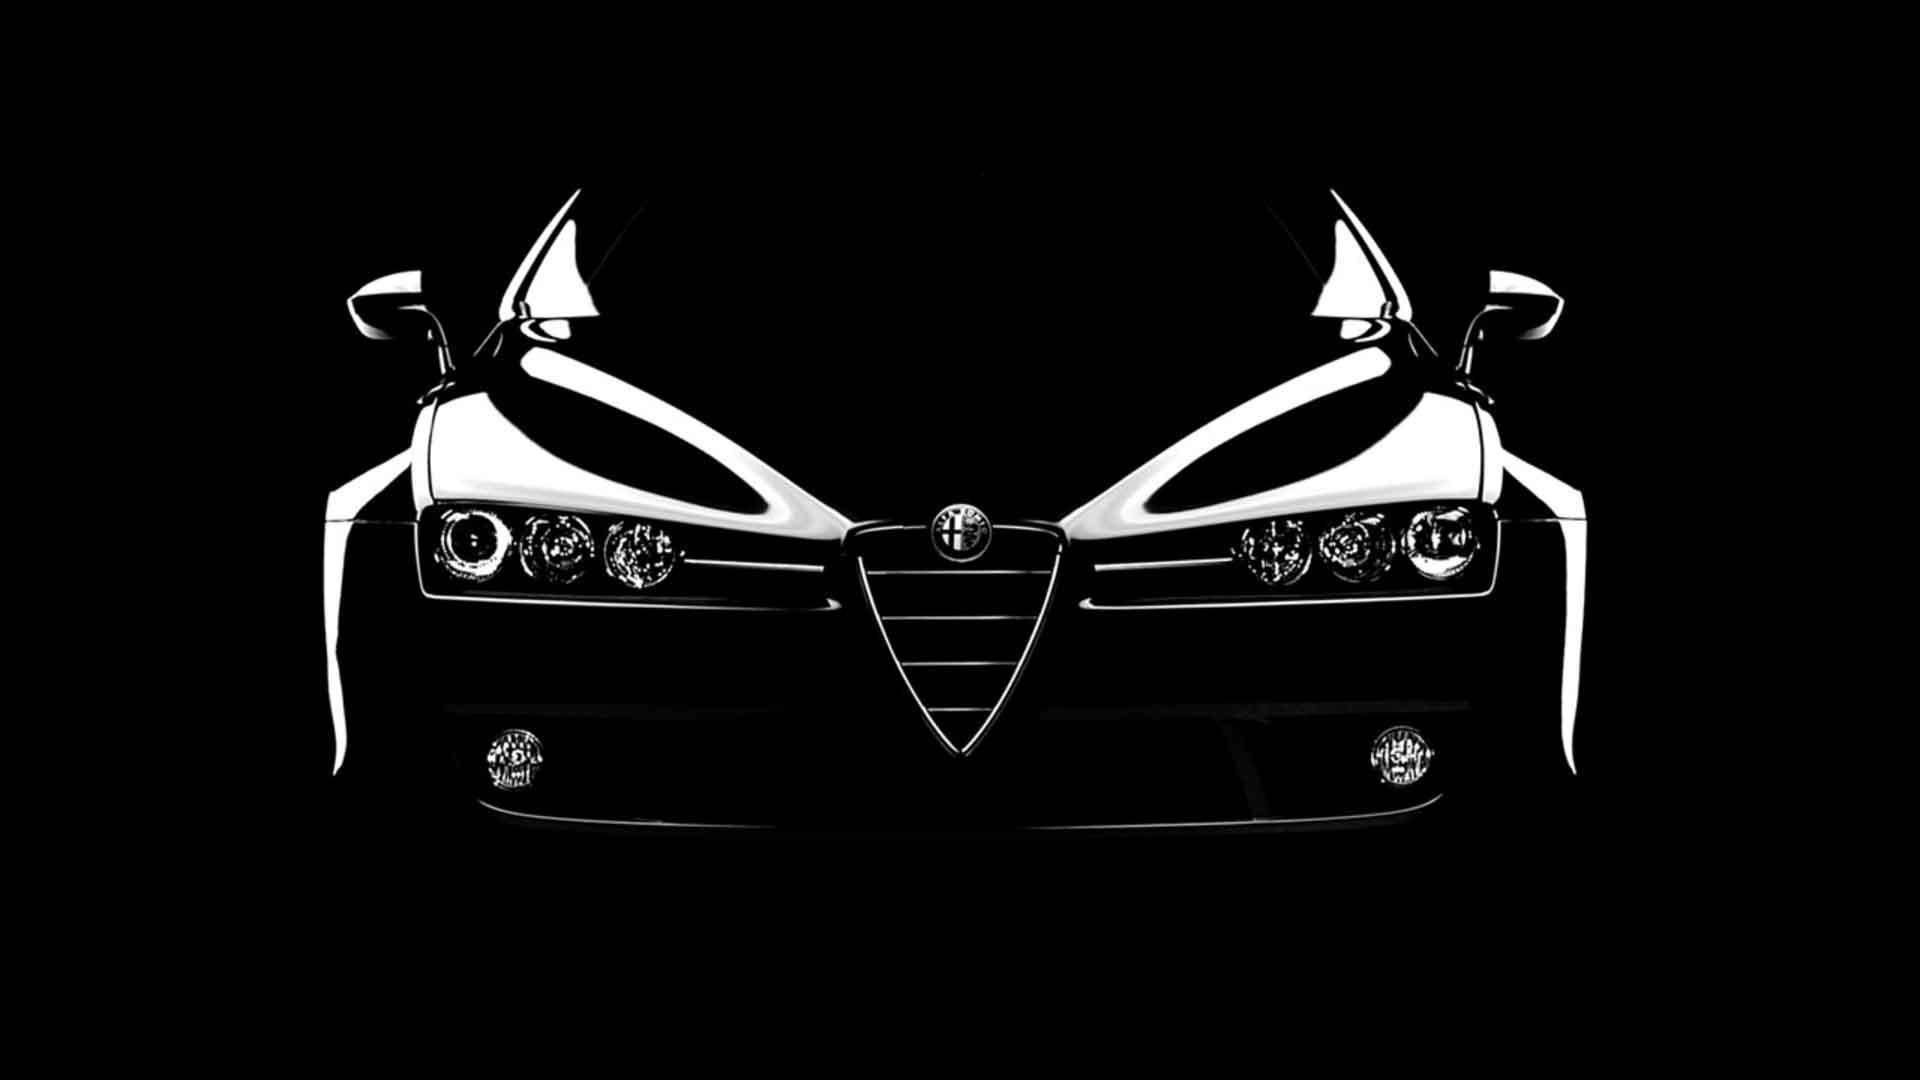 Fonds d&Alfa Romeo tous les wallpapers Alfa Romeo